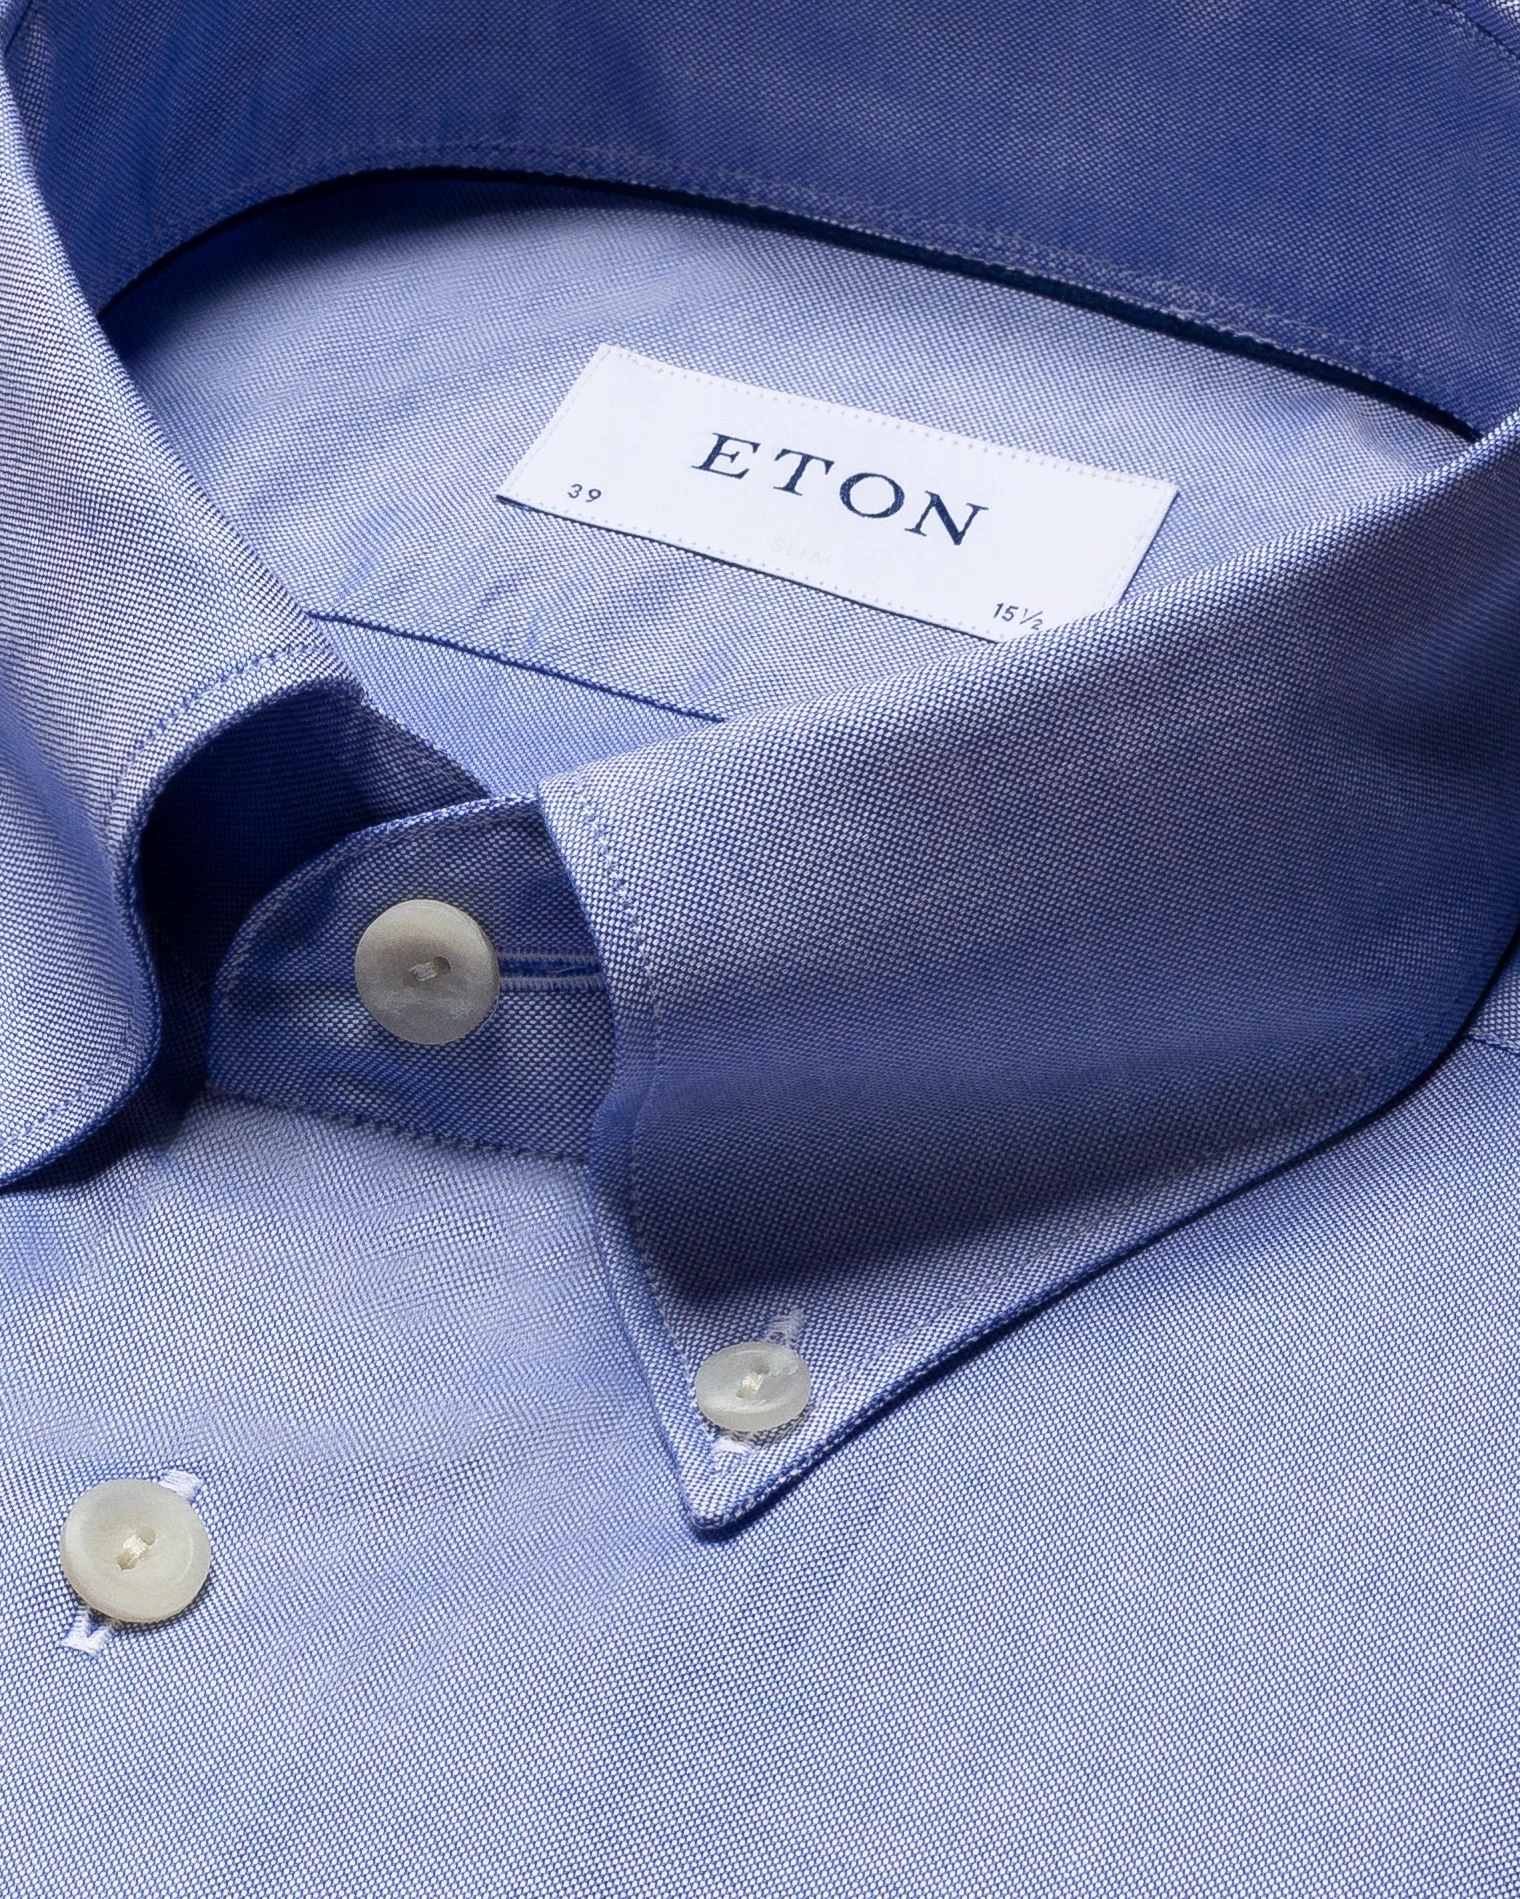 Eton - blue wrinkle free oxford shirt